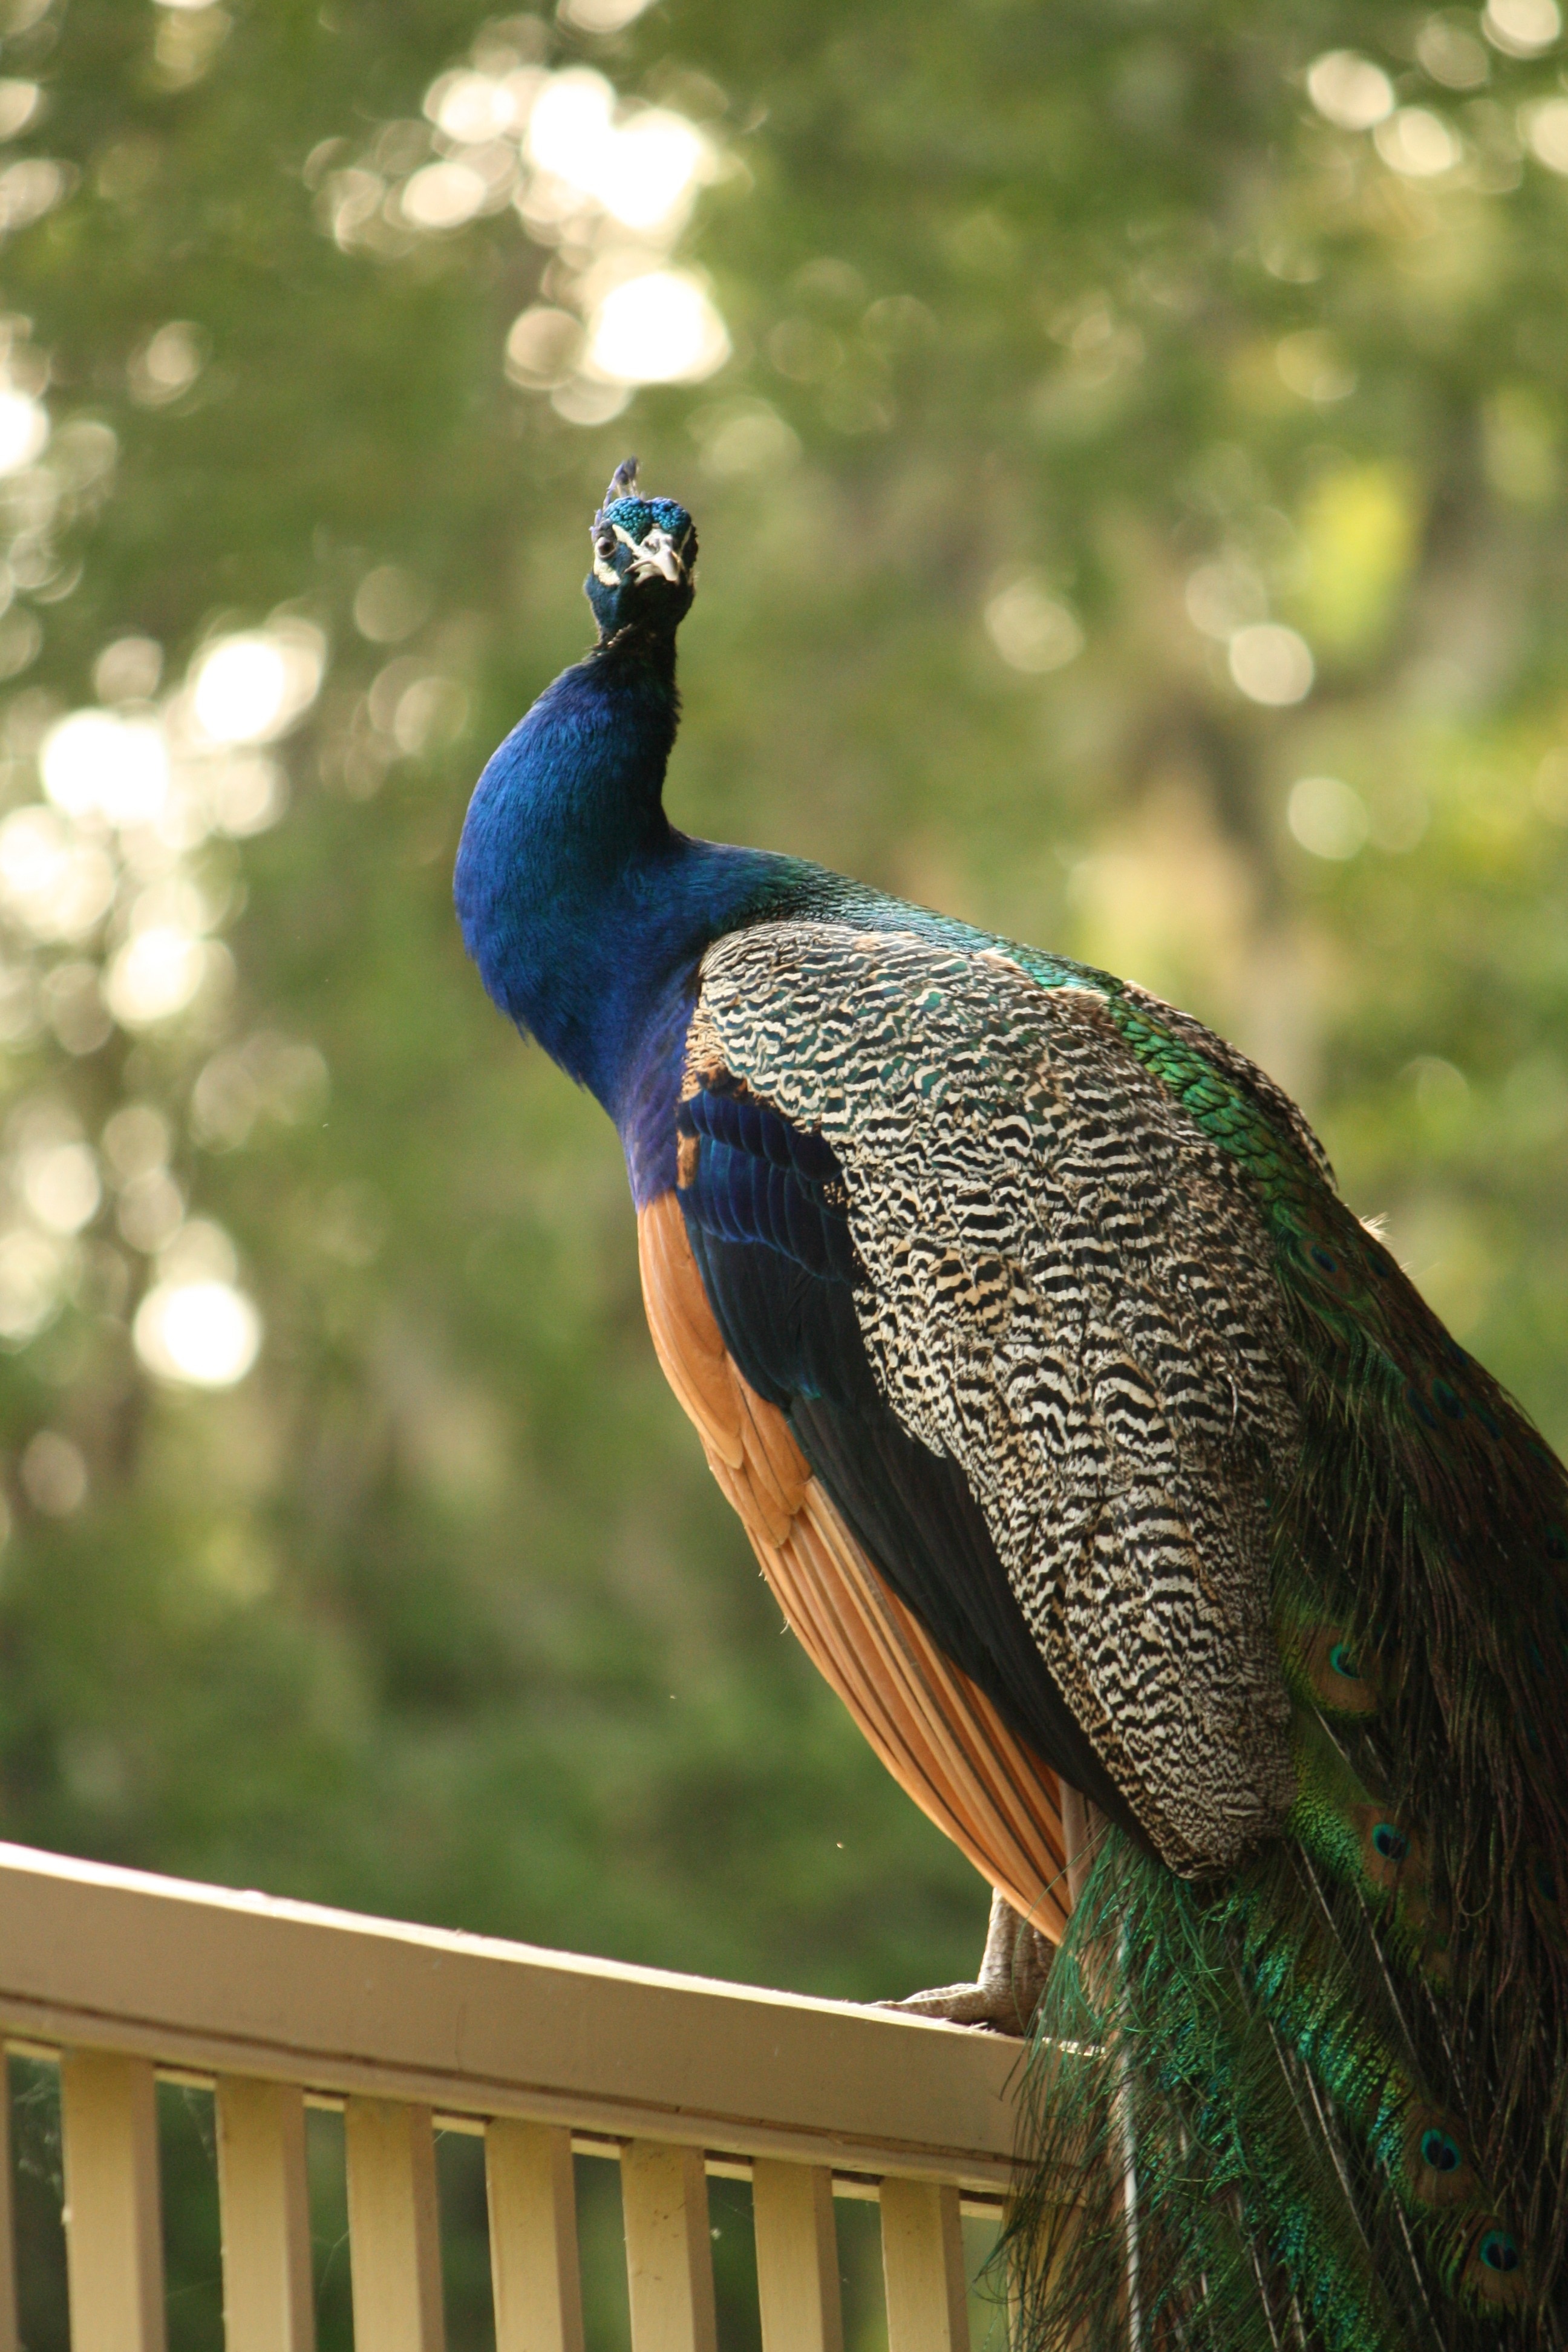 Peacock standing on brown wooden railings